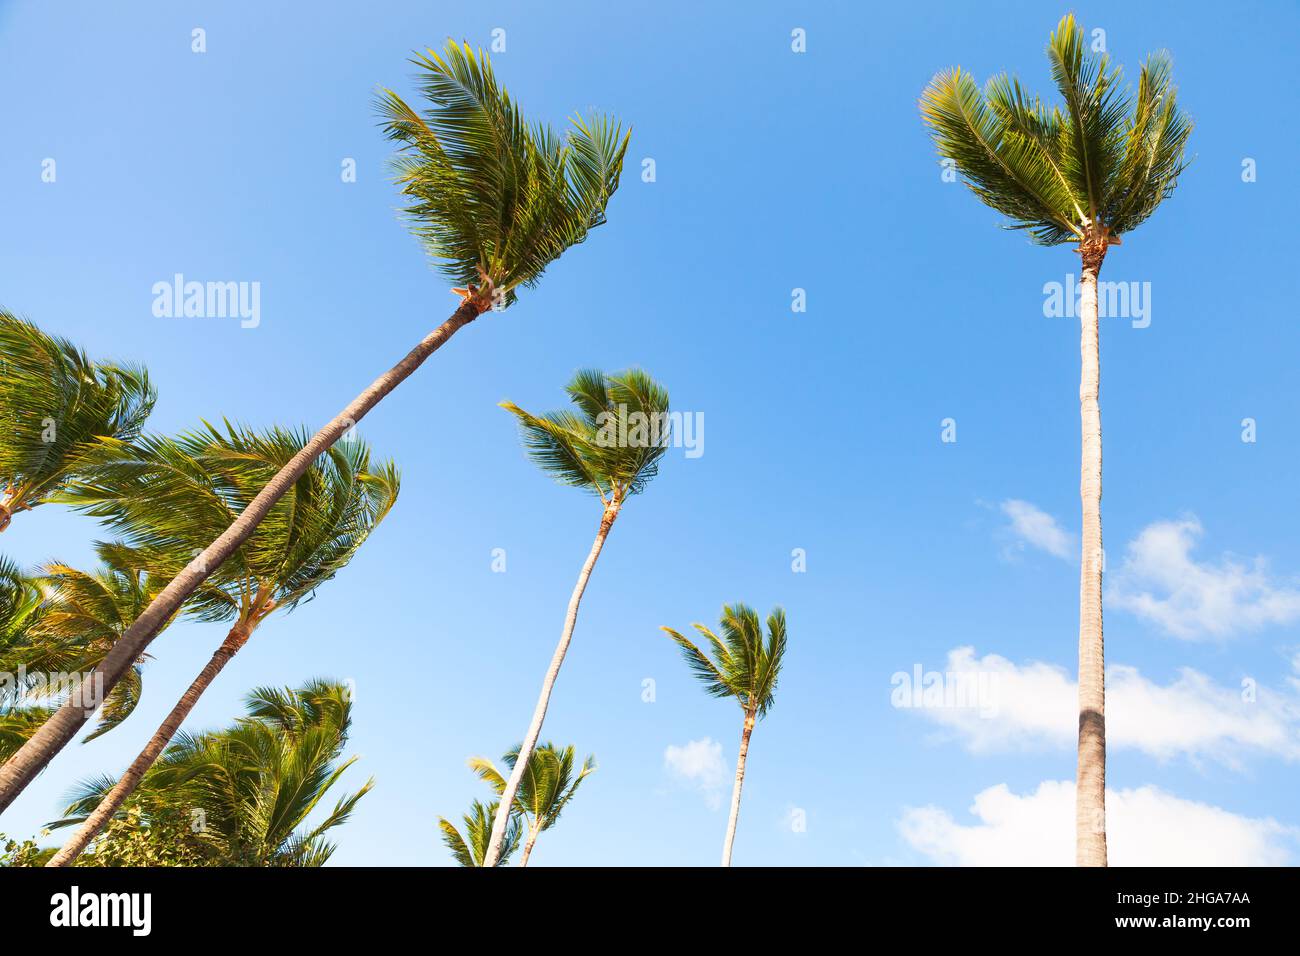 Hohe Palmen stehen unter blau bewölktem Himmel, Dominikanische republik Natur. Hintergrundbild Stockfoto